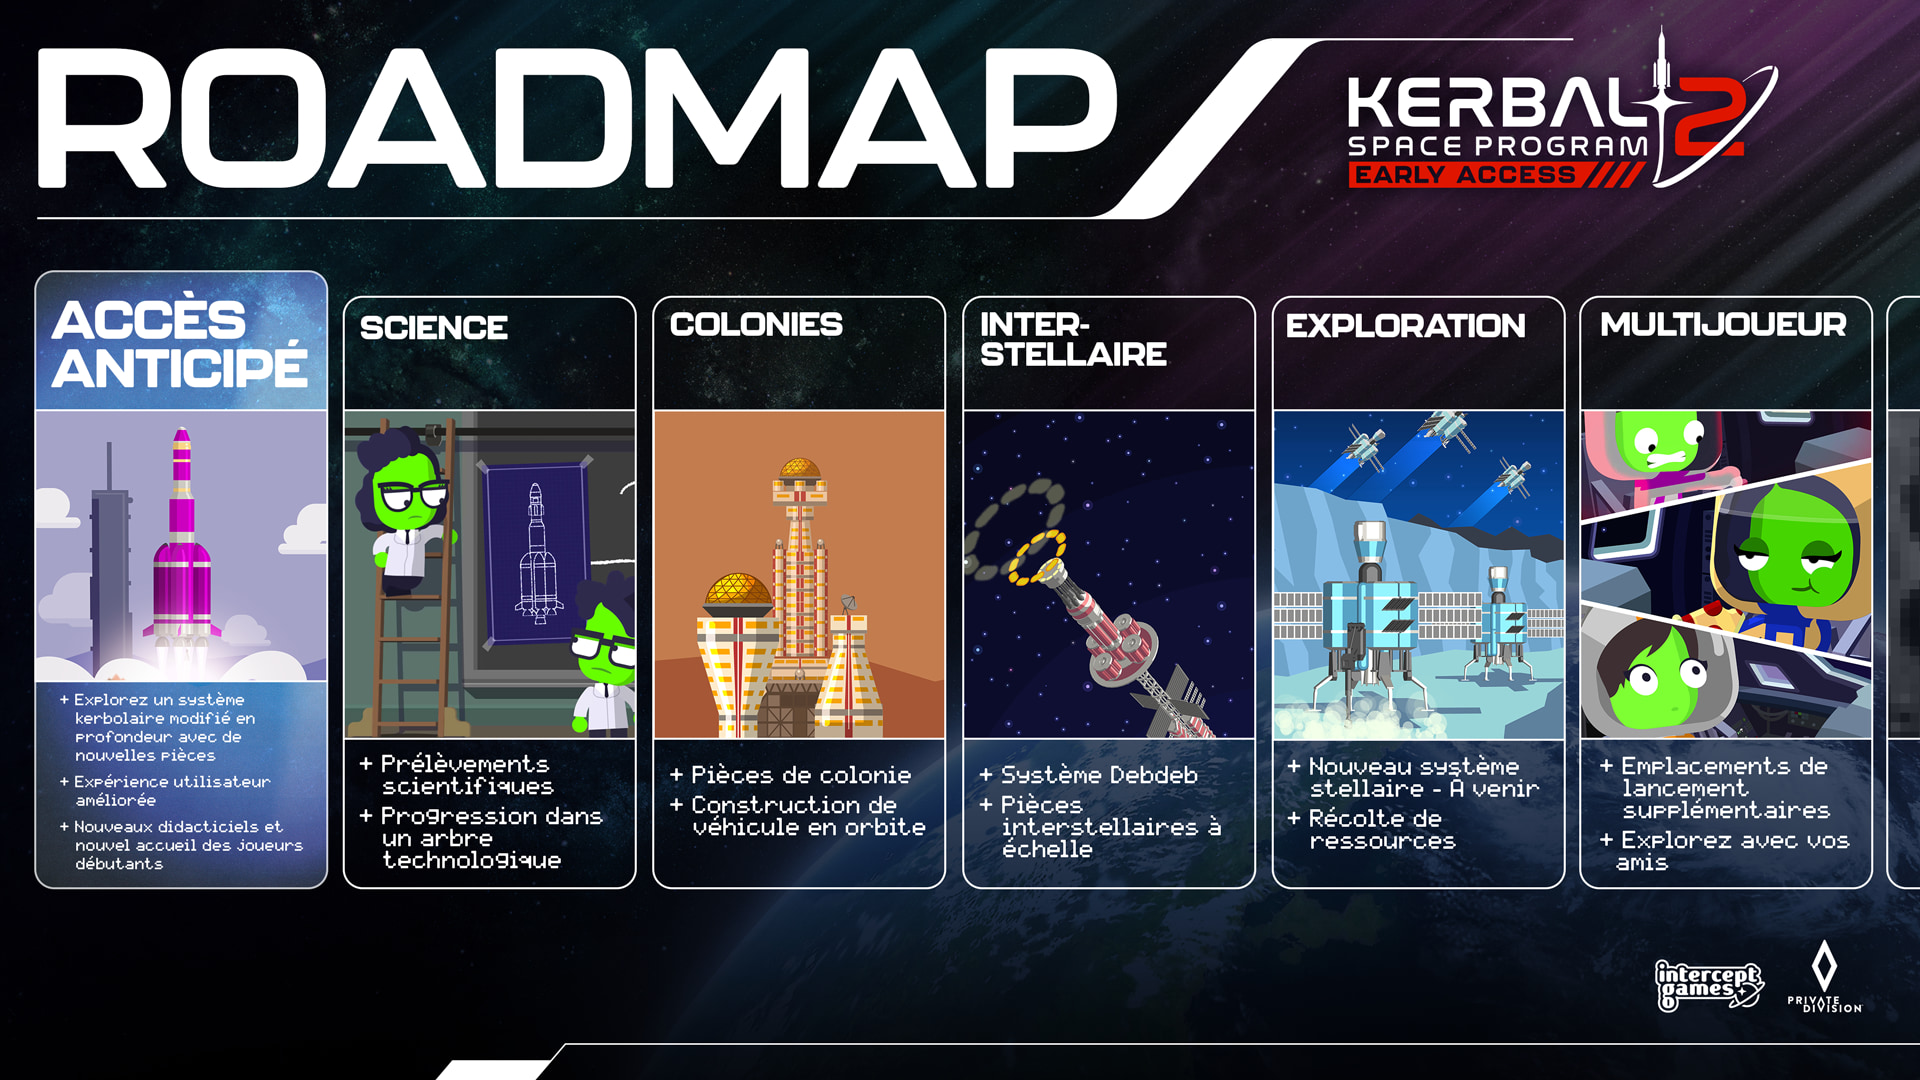 KSP2 Steam About ROADMAP FR